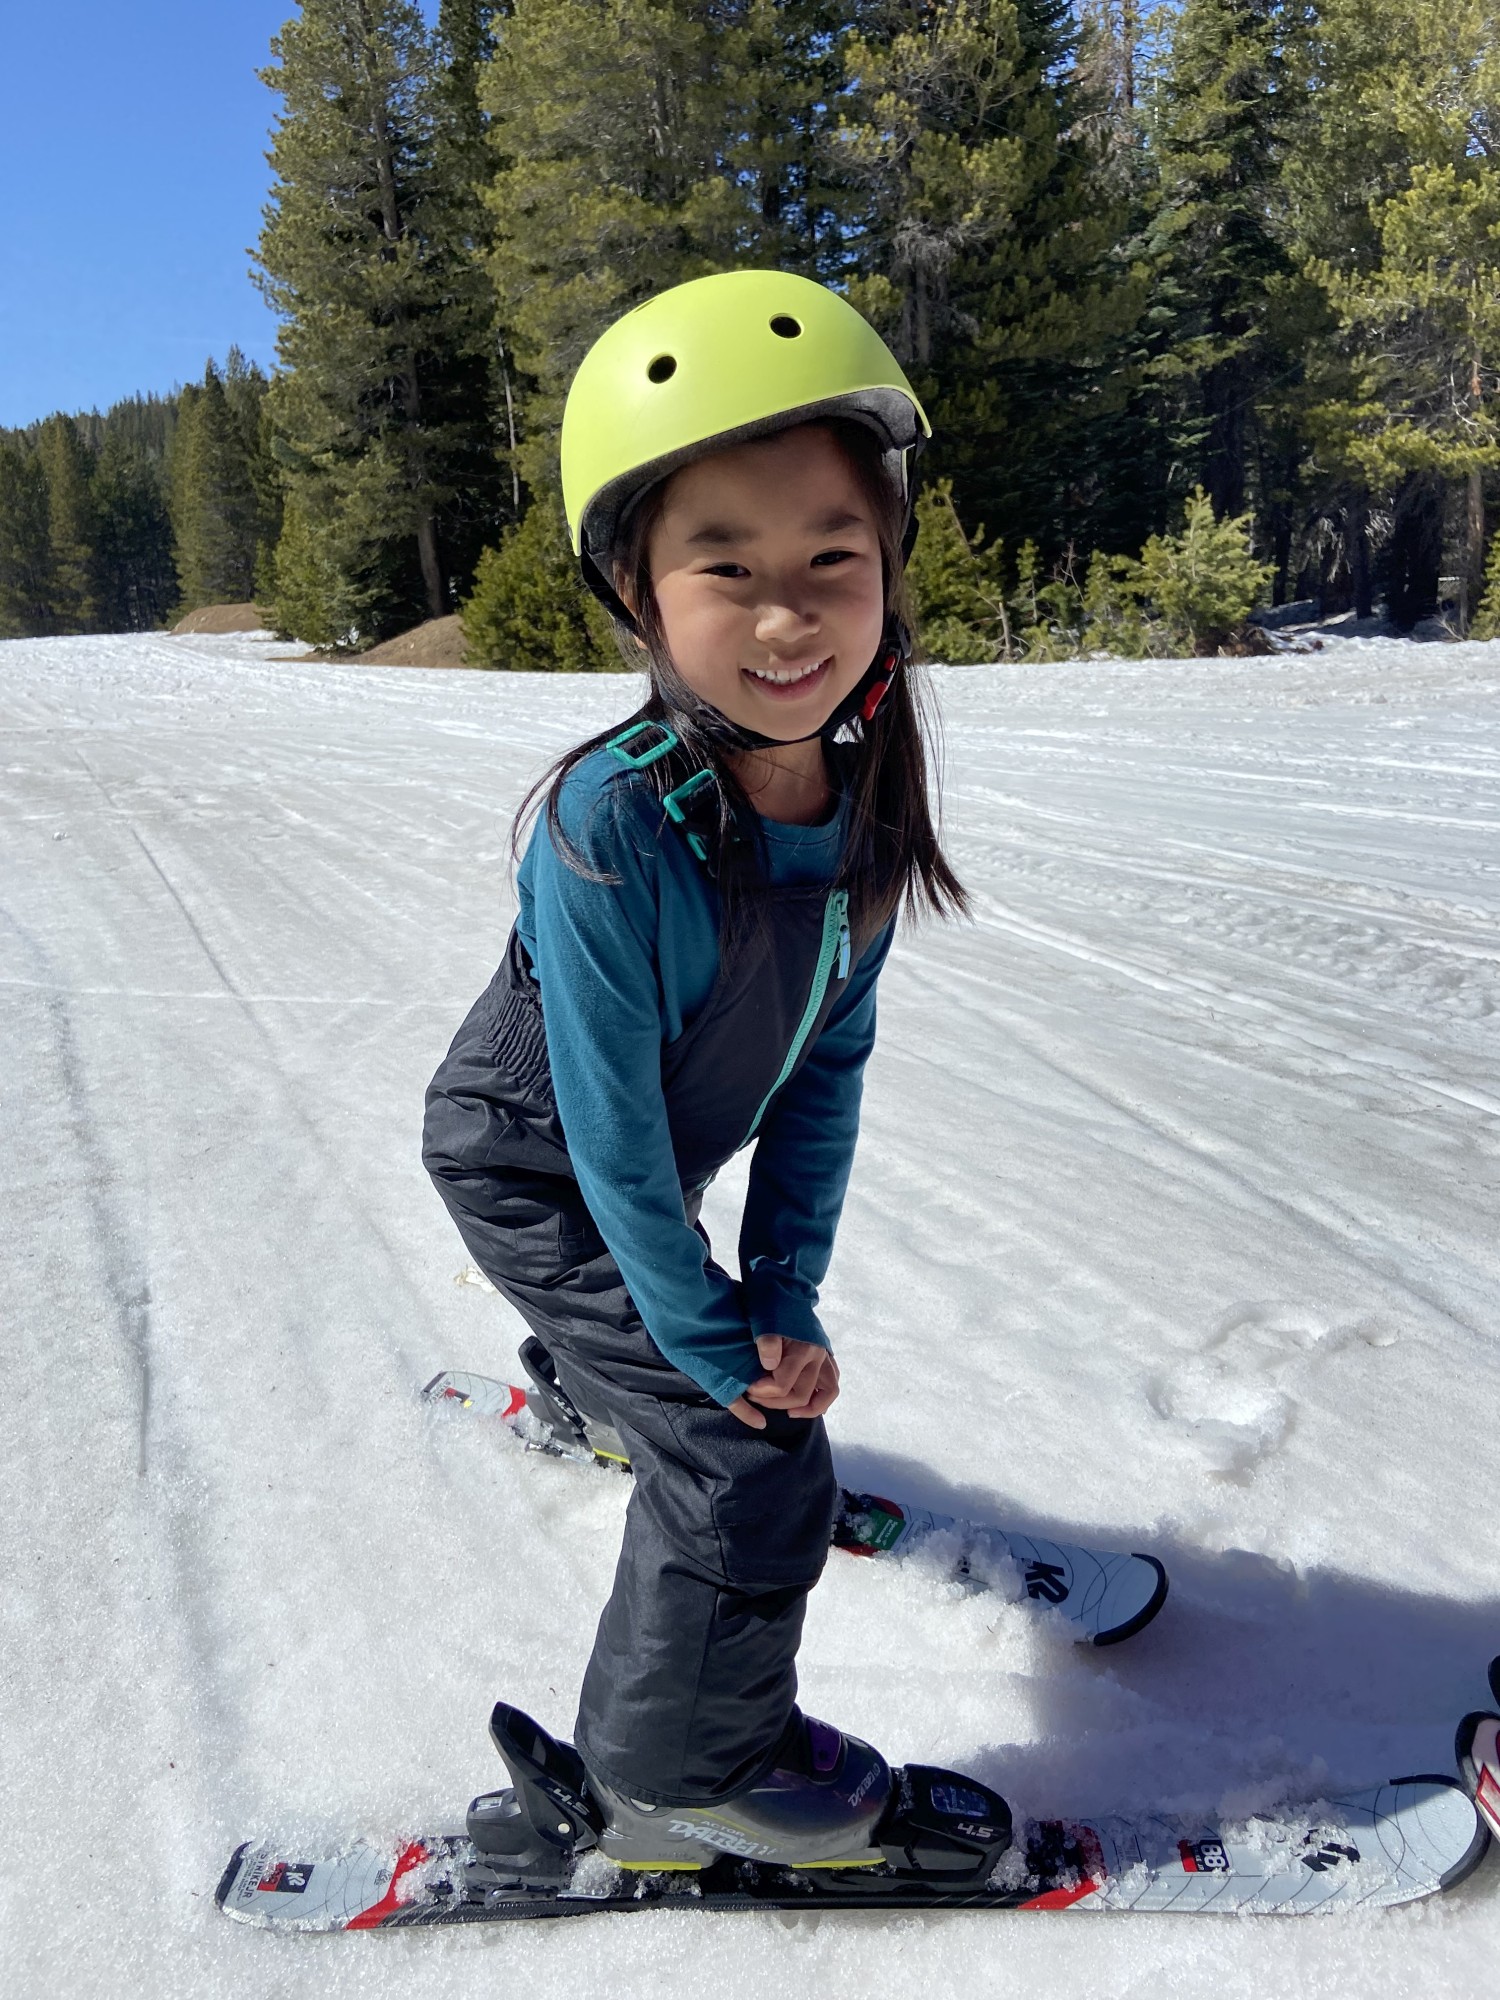 Kayli looking sporty and ready to ski!